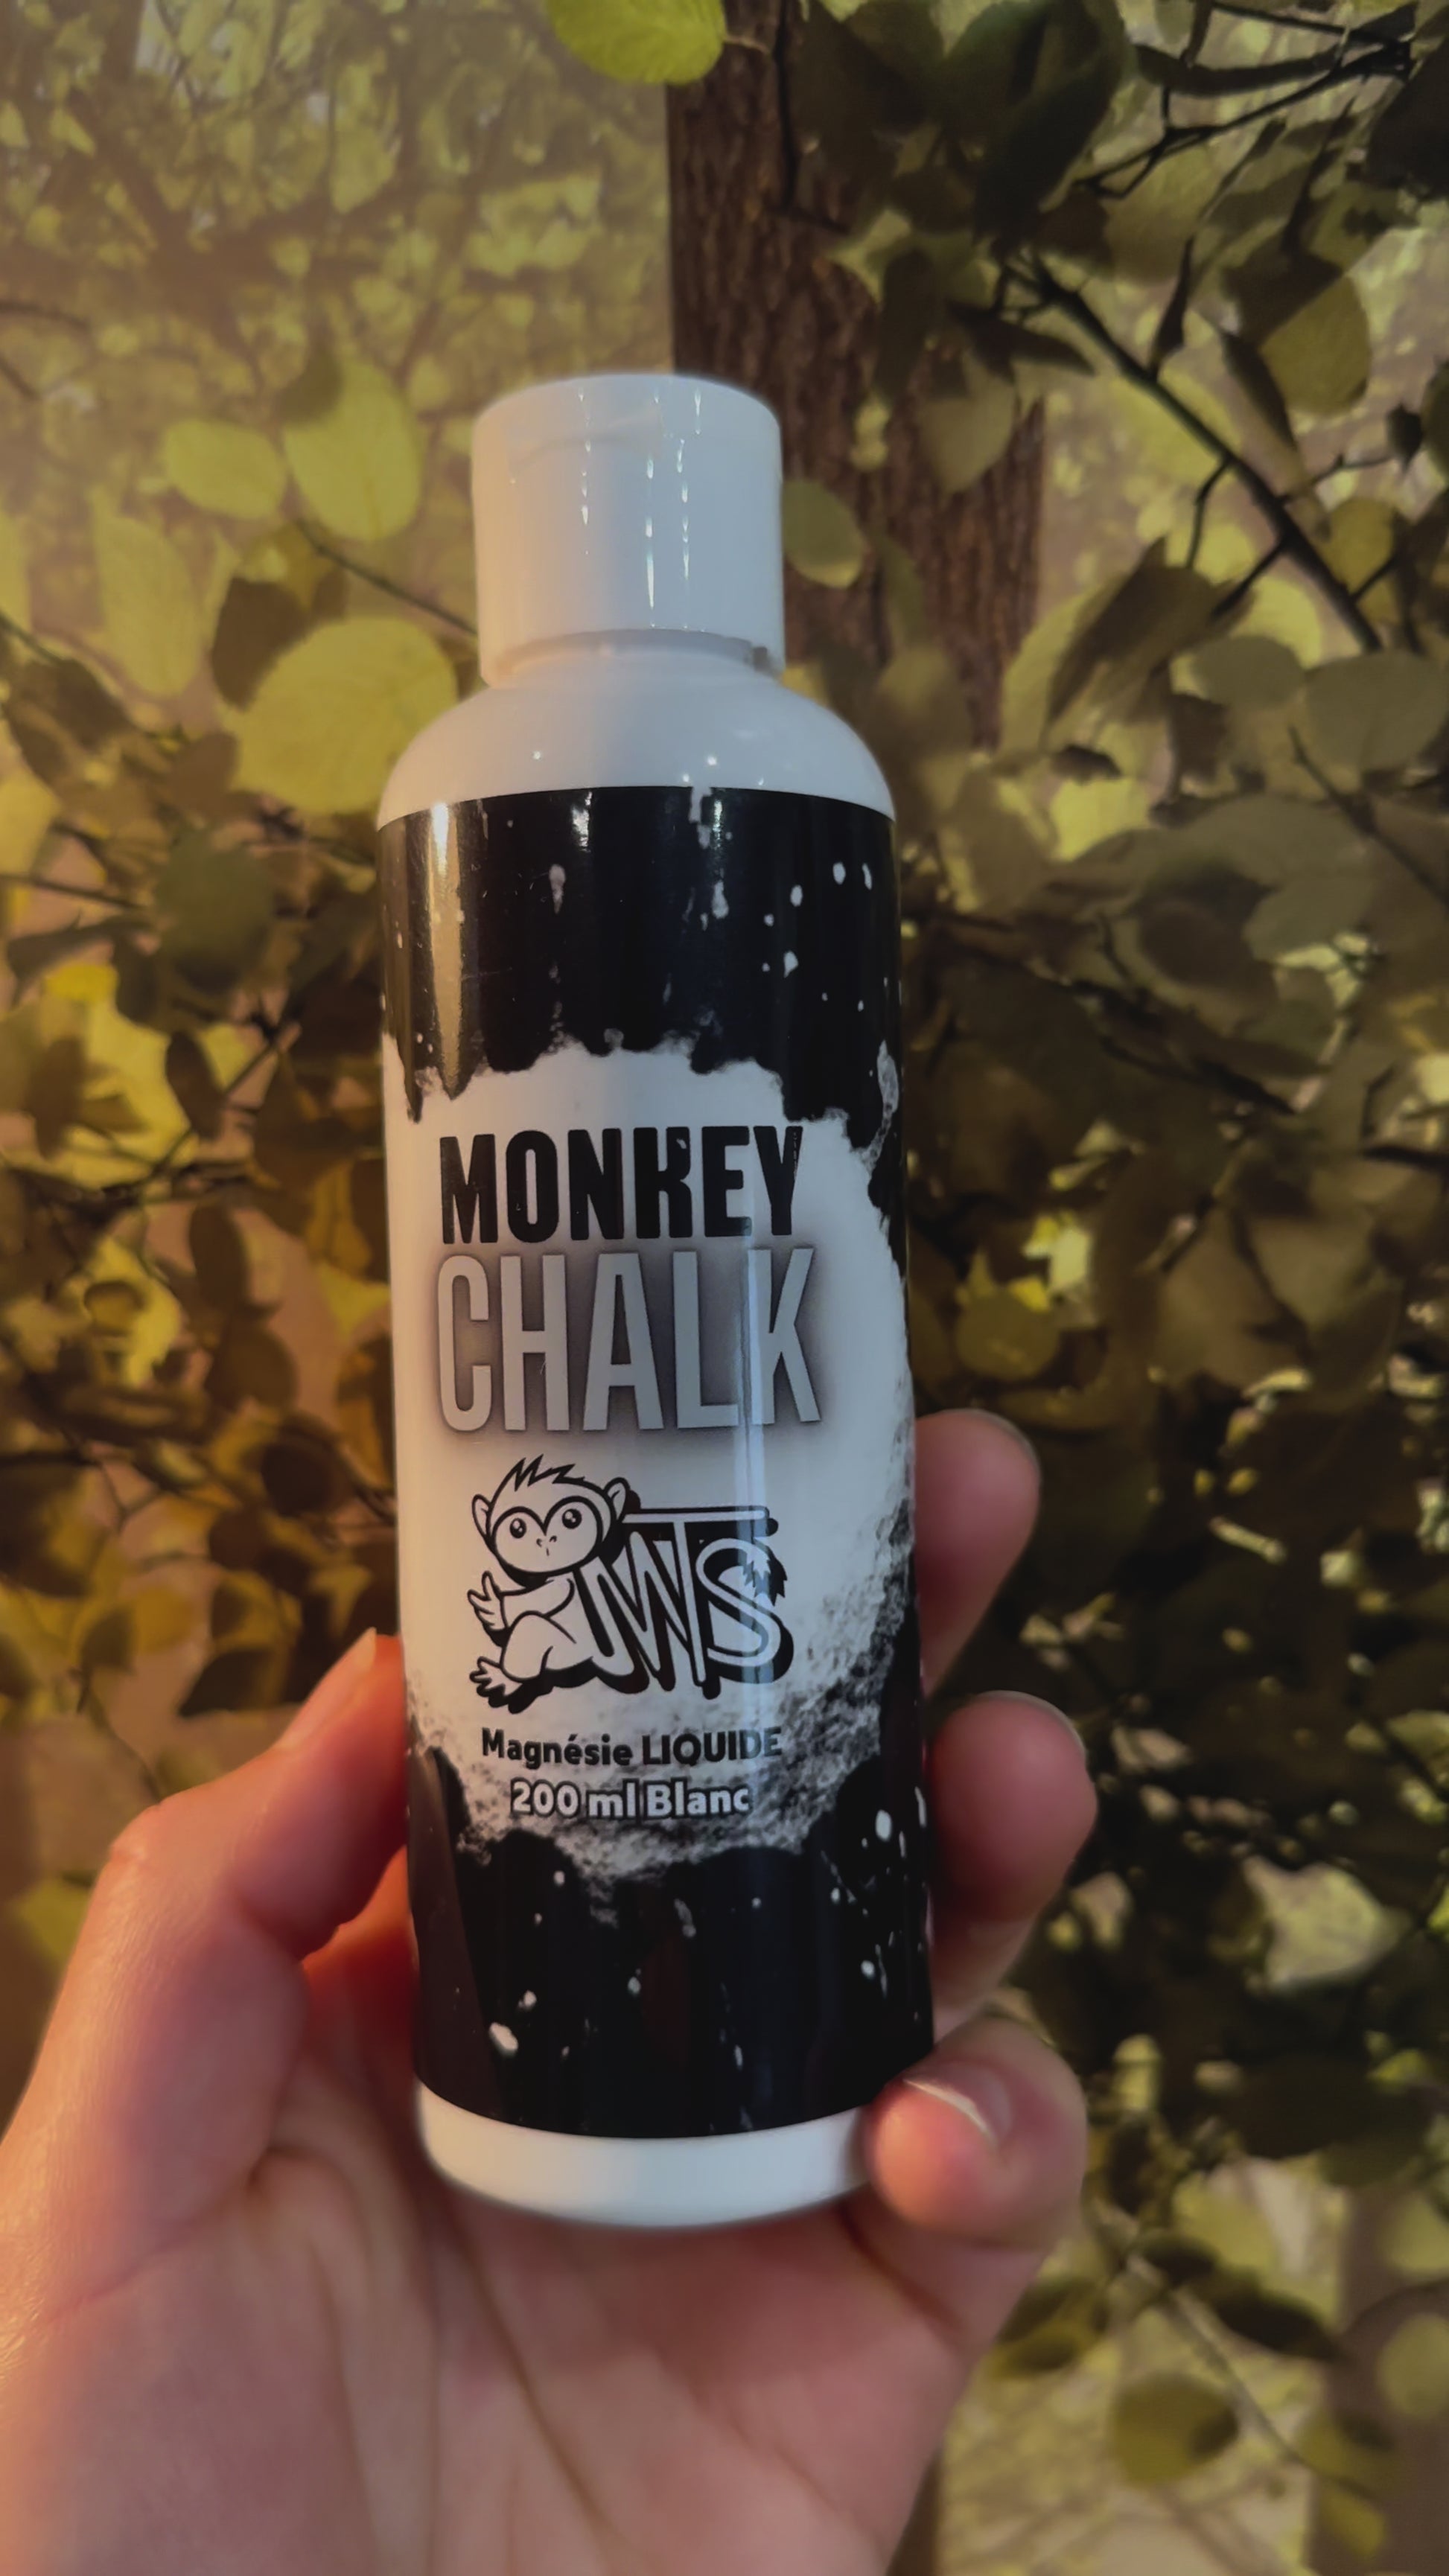 Monkey Chalk 200ml magnésie liquide – monkeytvshop